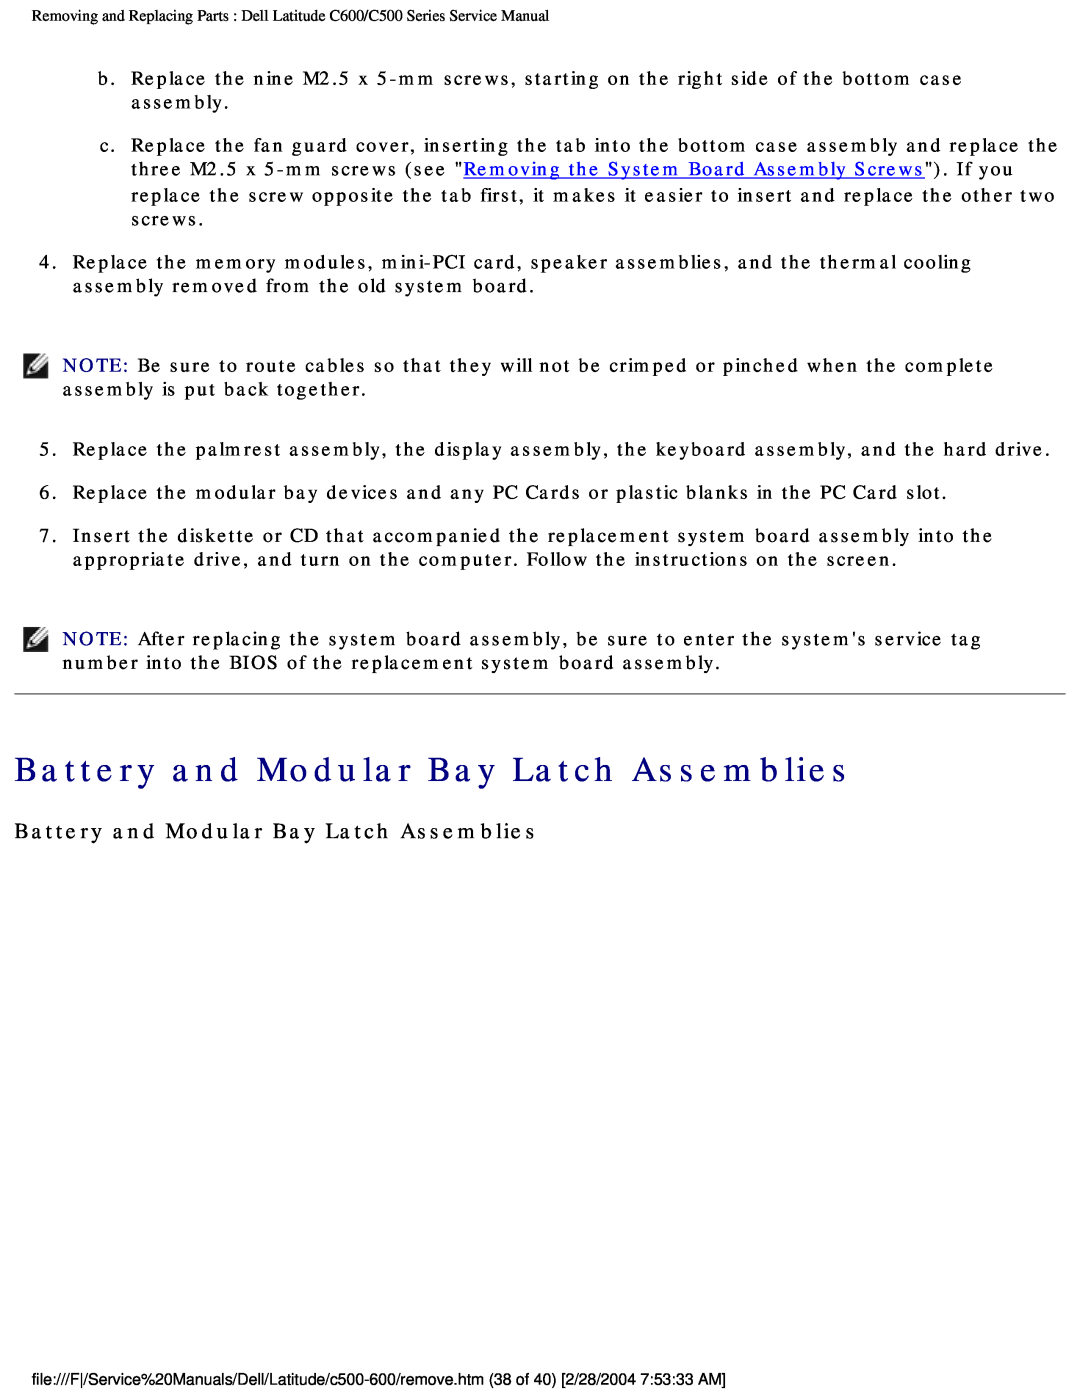 Dell C500 manual Battery and Modular Bay Latch Assemblies 